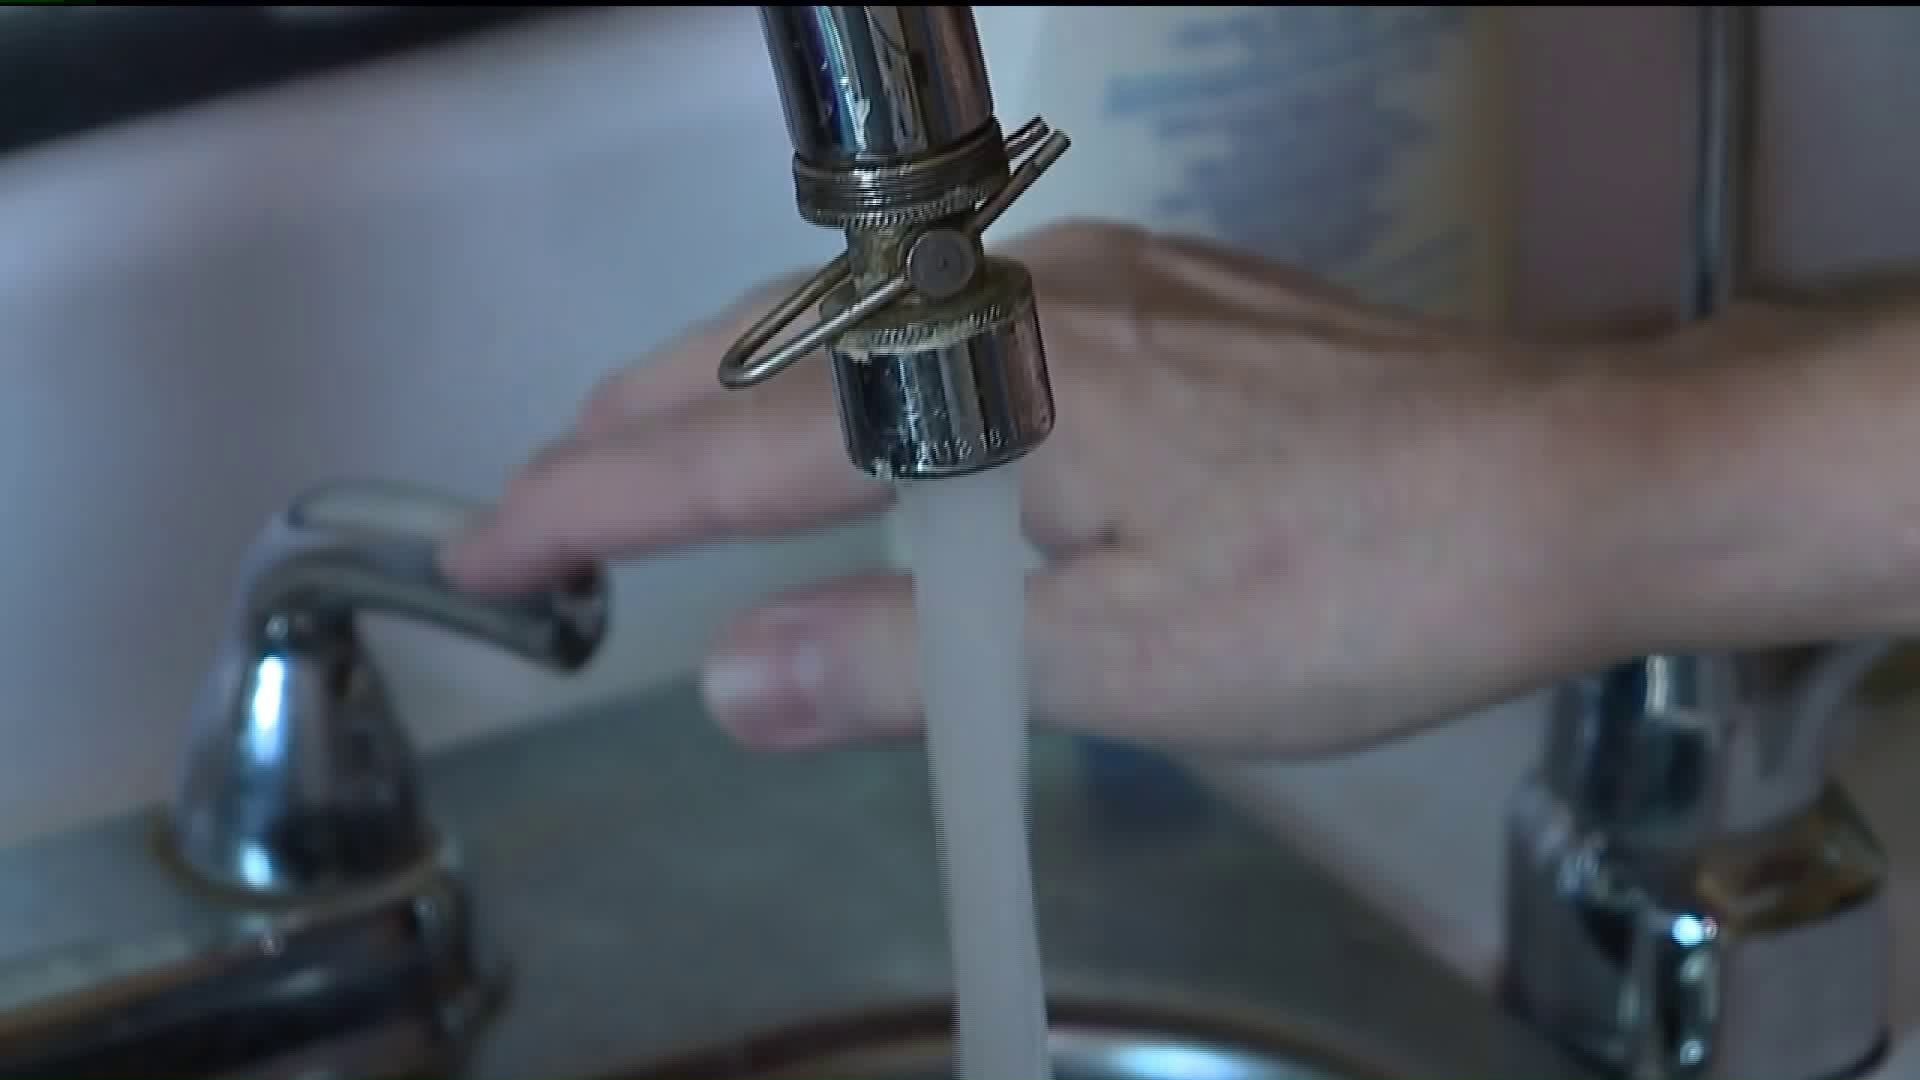 Water Problems Worry Mifflinburg Residents